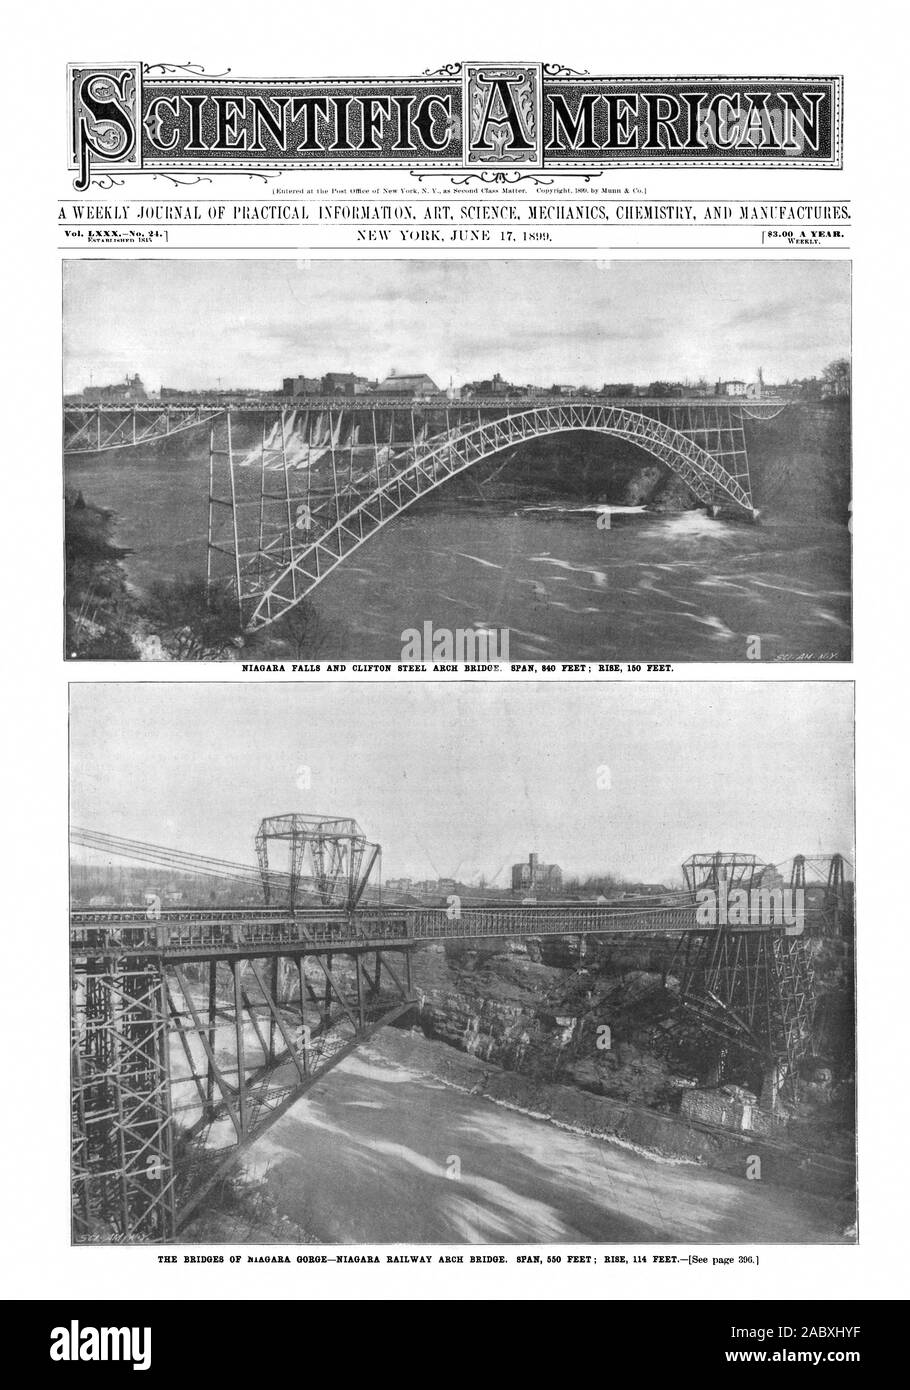 NIAGARA FALLS AND CLIFTON STEEL ARCH BRIDGE. SPAN 840 FEET; RISE 150 FEET., scientific american, 1899-06-17 Stock Photo